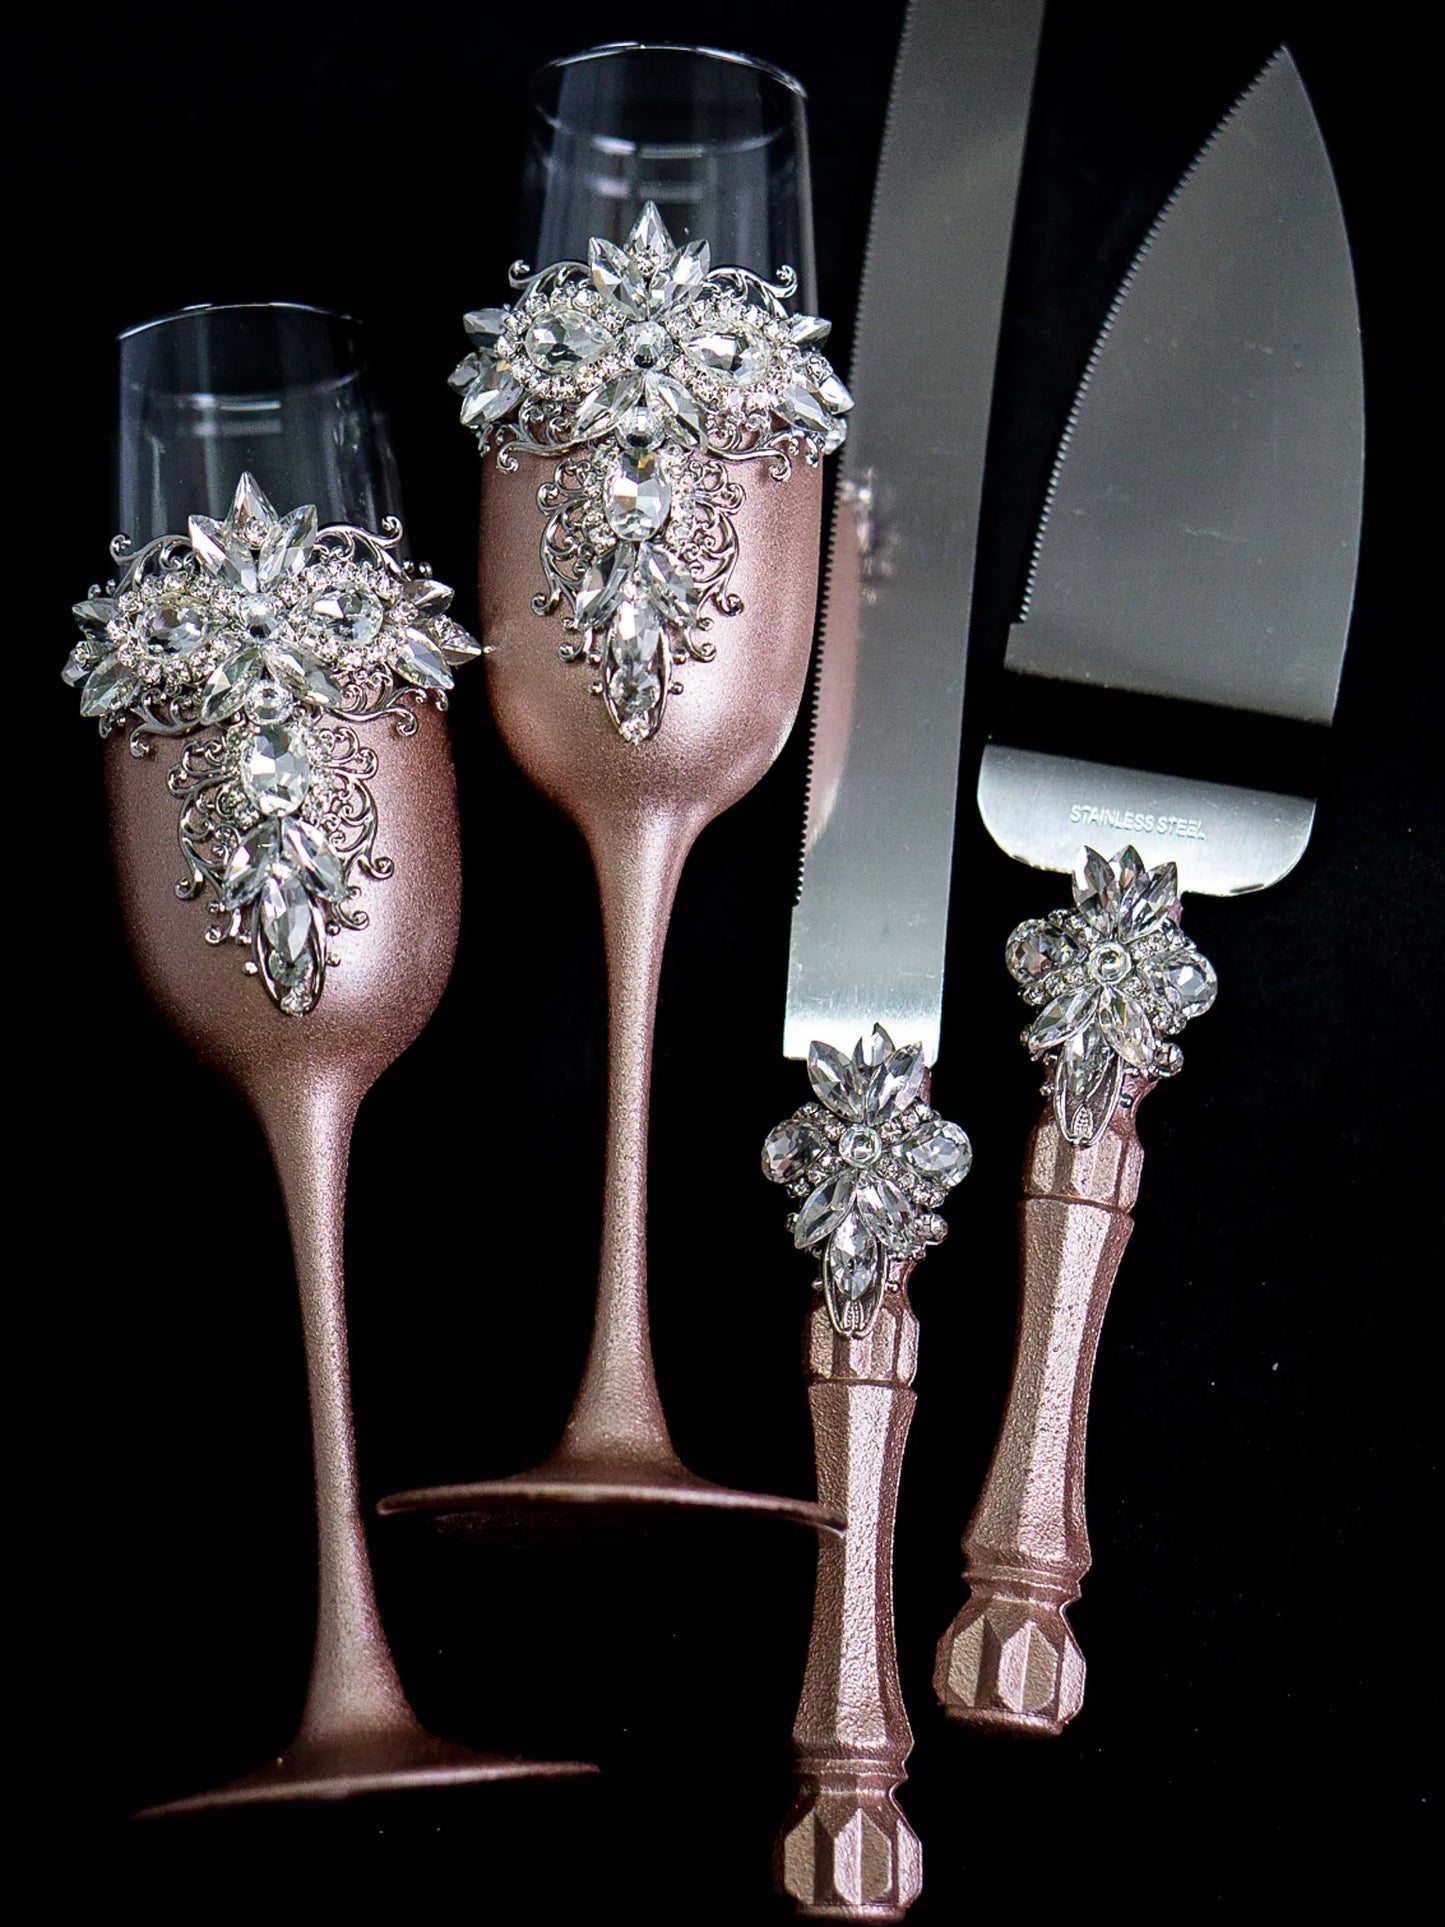 Crystal cake knife and server for weddings